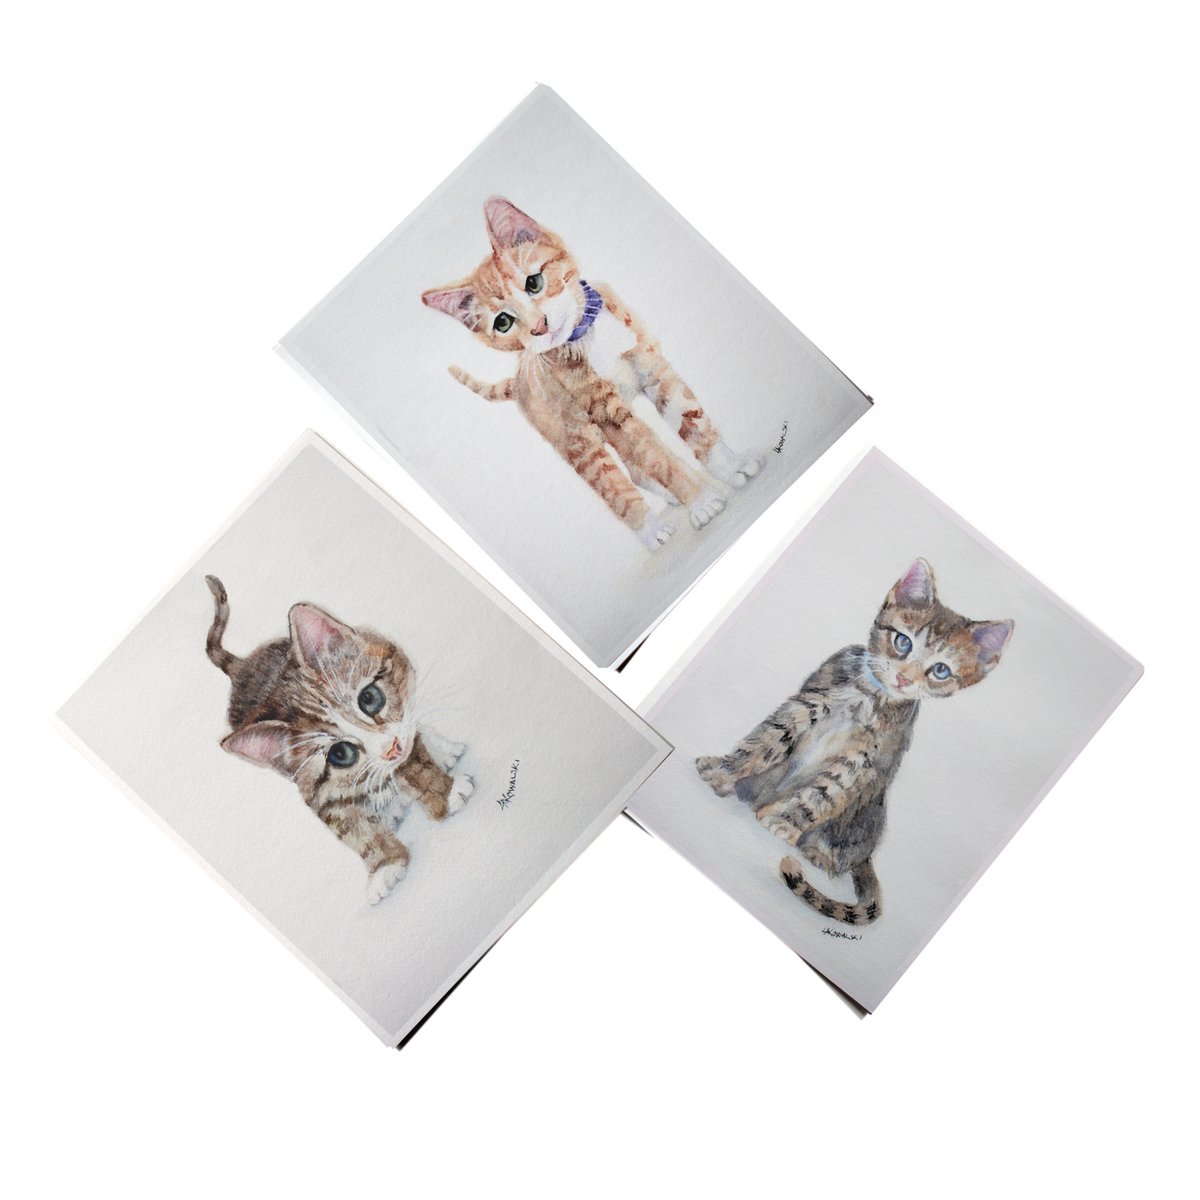 Cute Kitten Watercolor Prints
Find this selection on #goimagine

#kitten #cats #catlovers #homedecor #wallart #watercolor #artprint #kidsdecor #nursery #shopsmall #supportsmallbusiness #SMILEtt23 #feline 

goimagine.com/kitten-waterco…